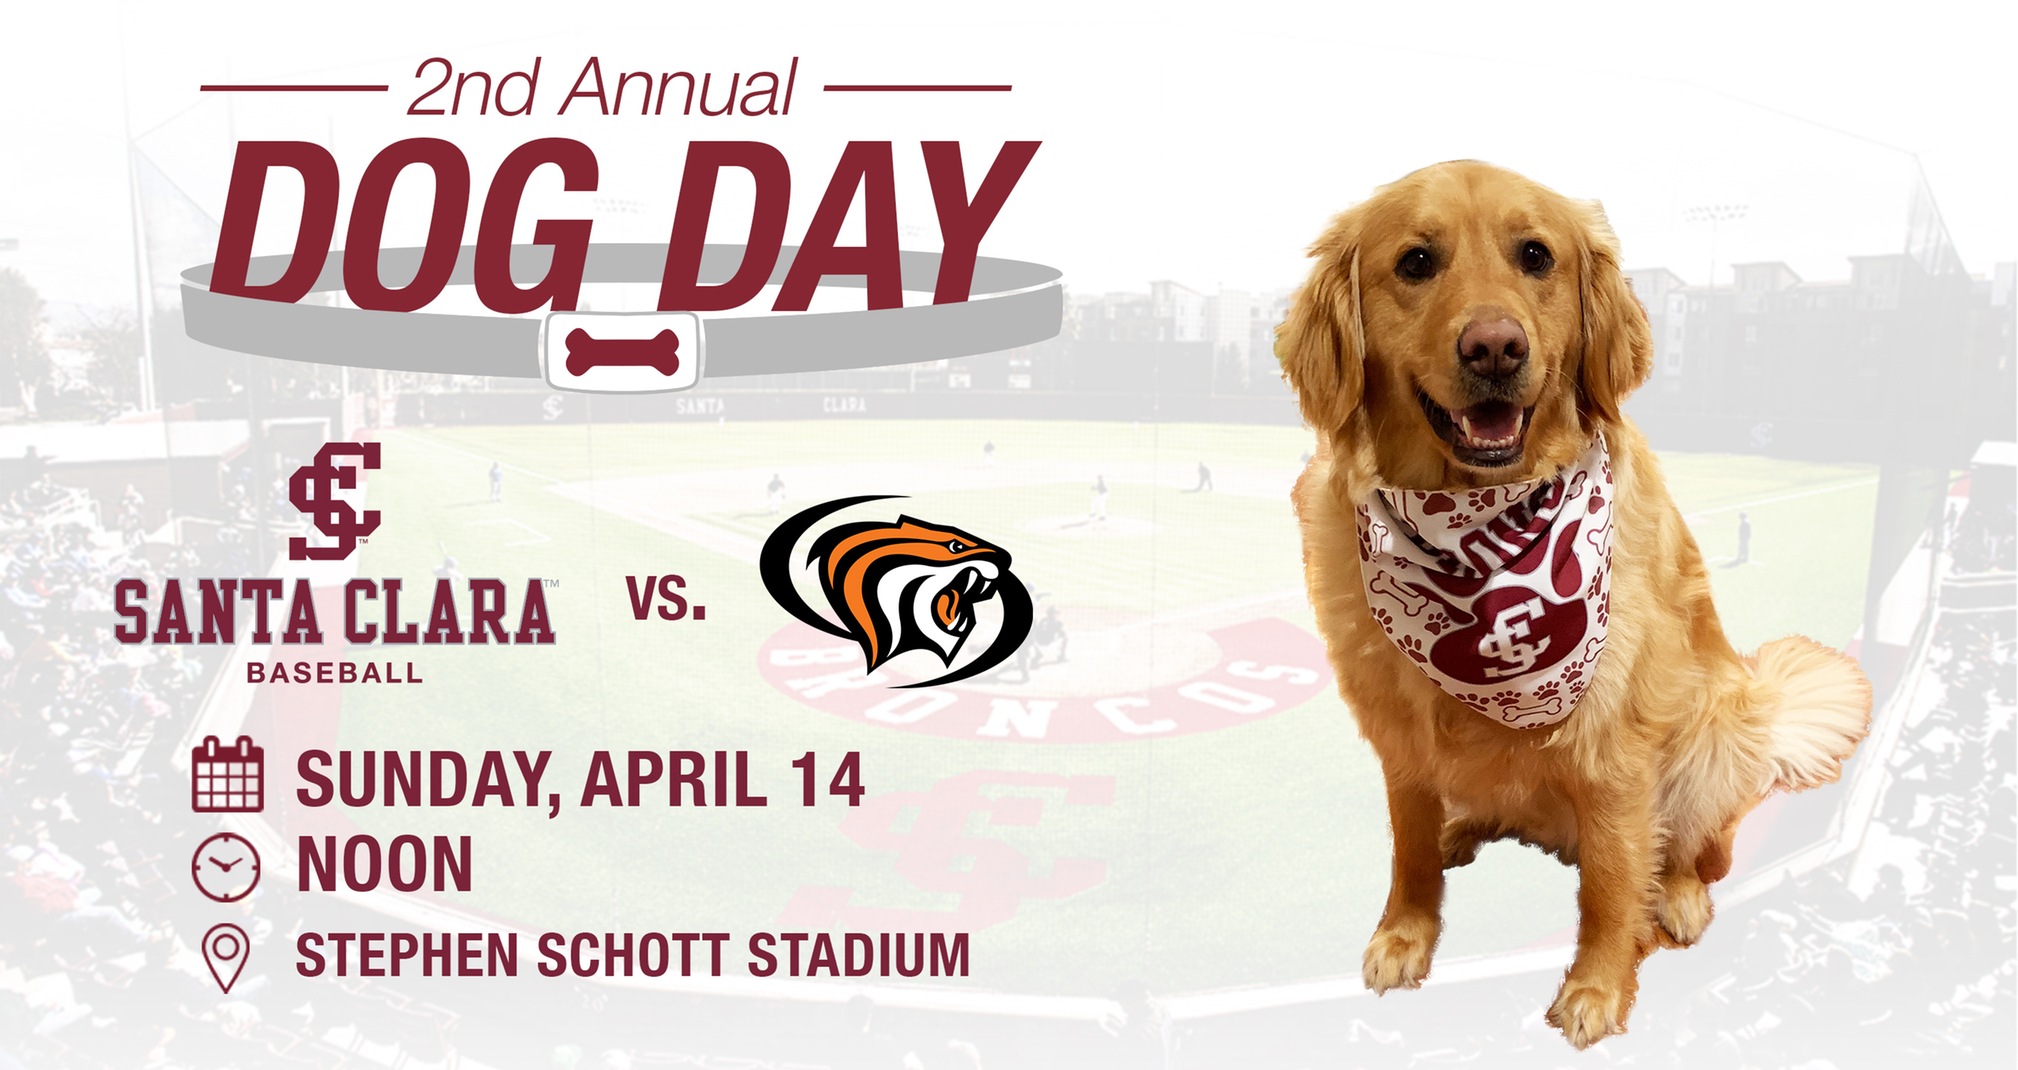 Second Annual Dog Day At Stephen Schott Stadium On Sunday, April 14